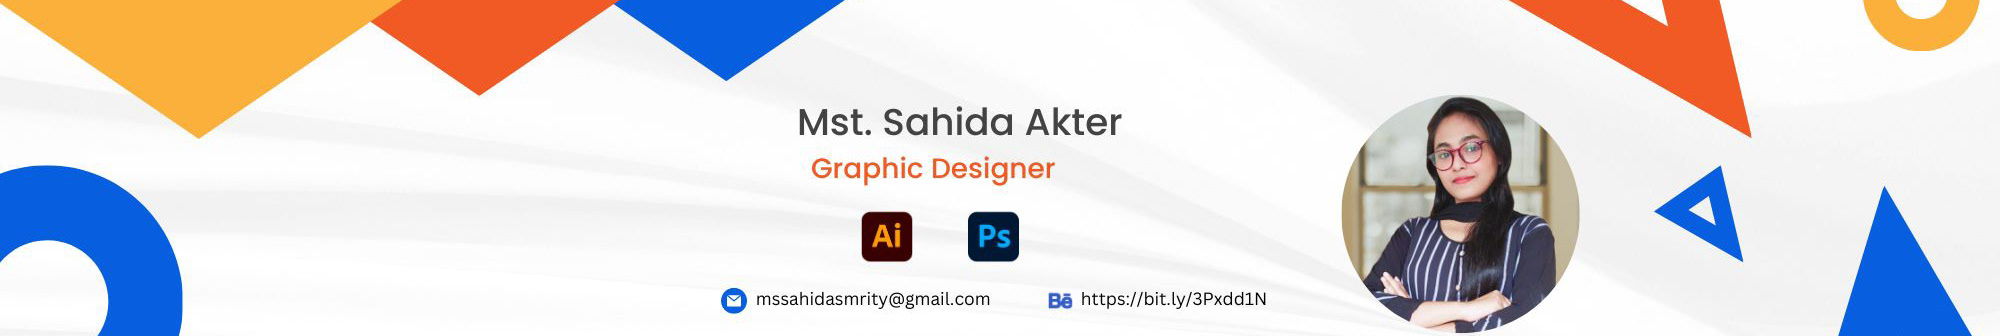 Mst. Sahida Akter profil başlığı